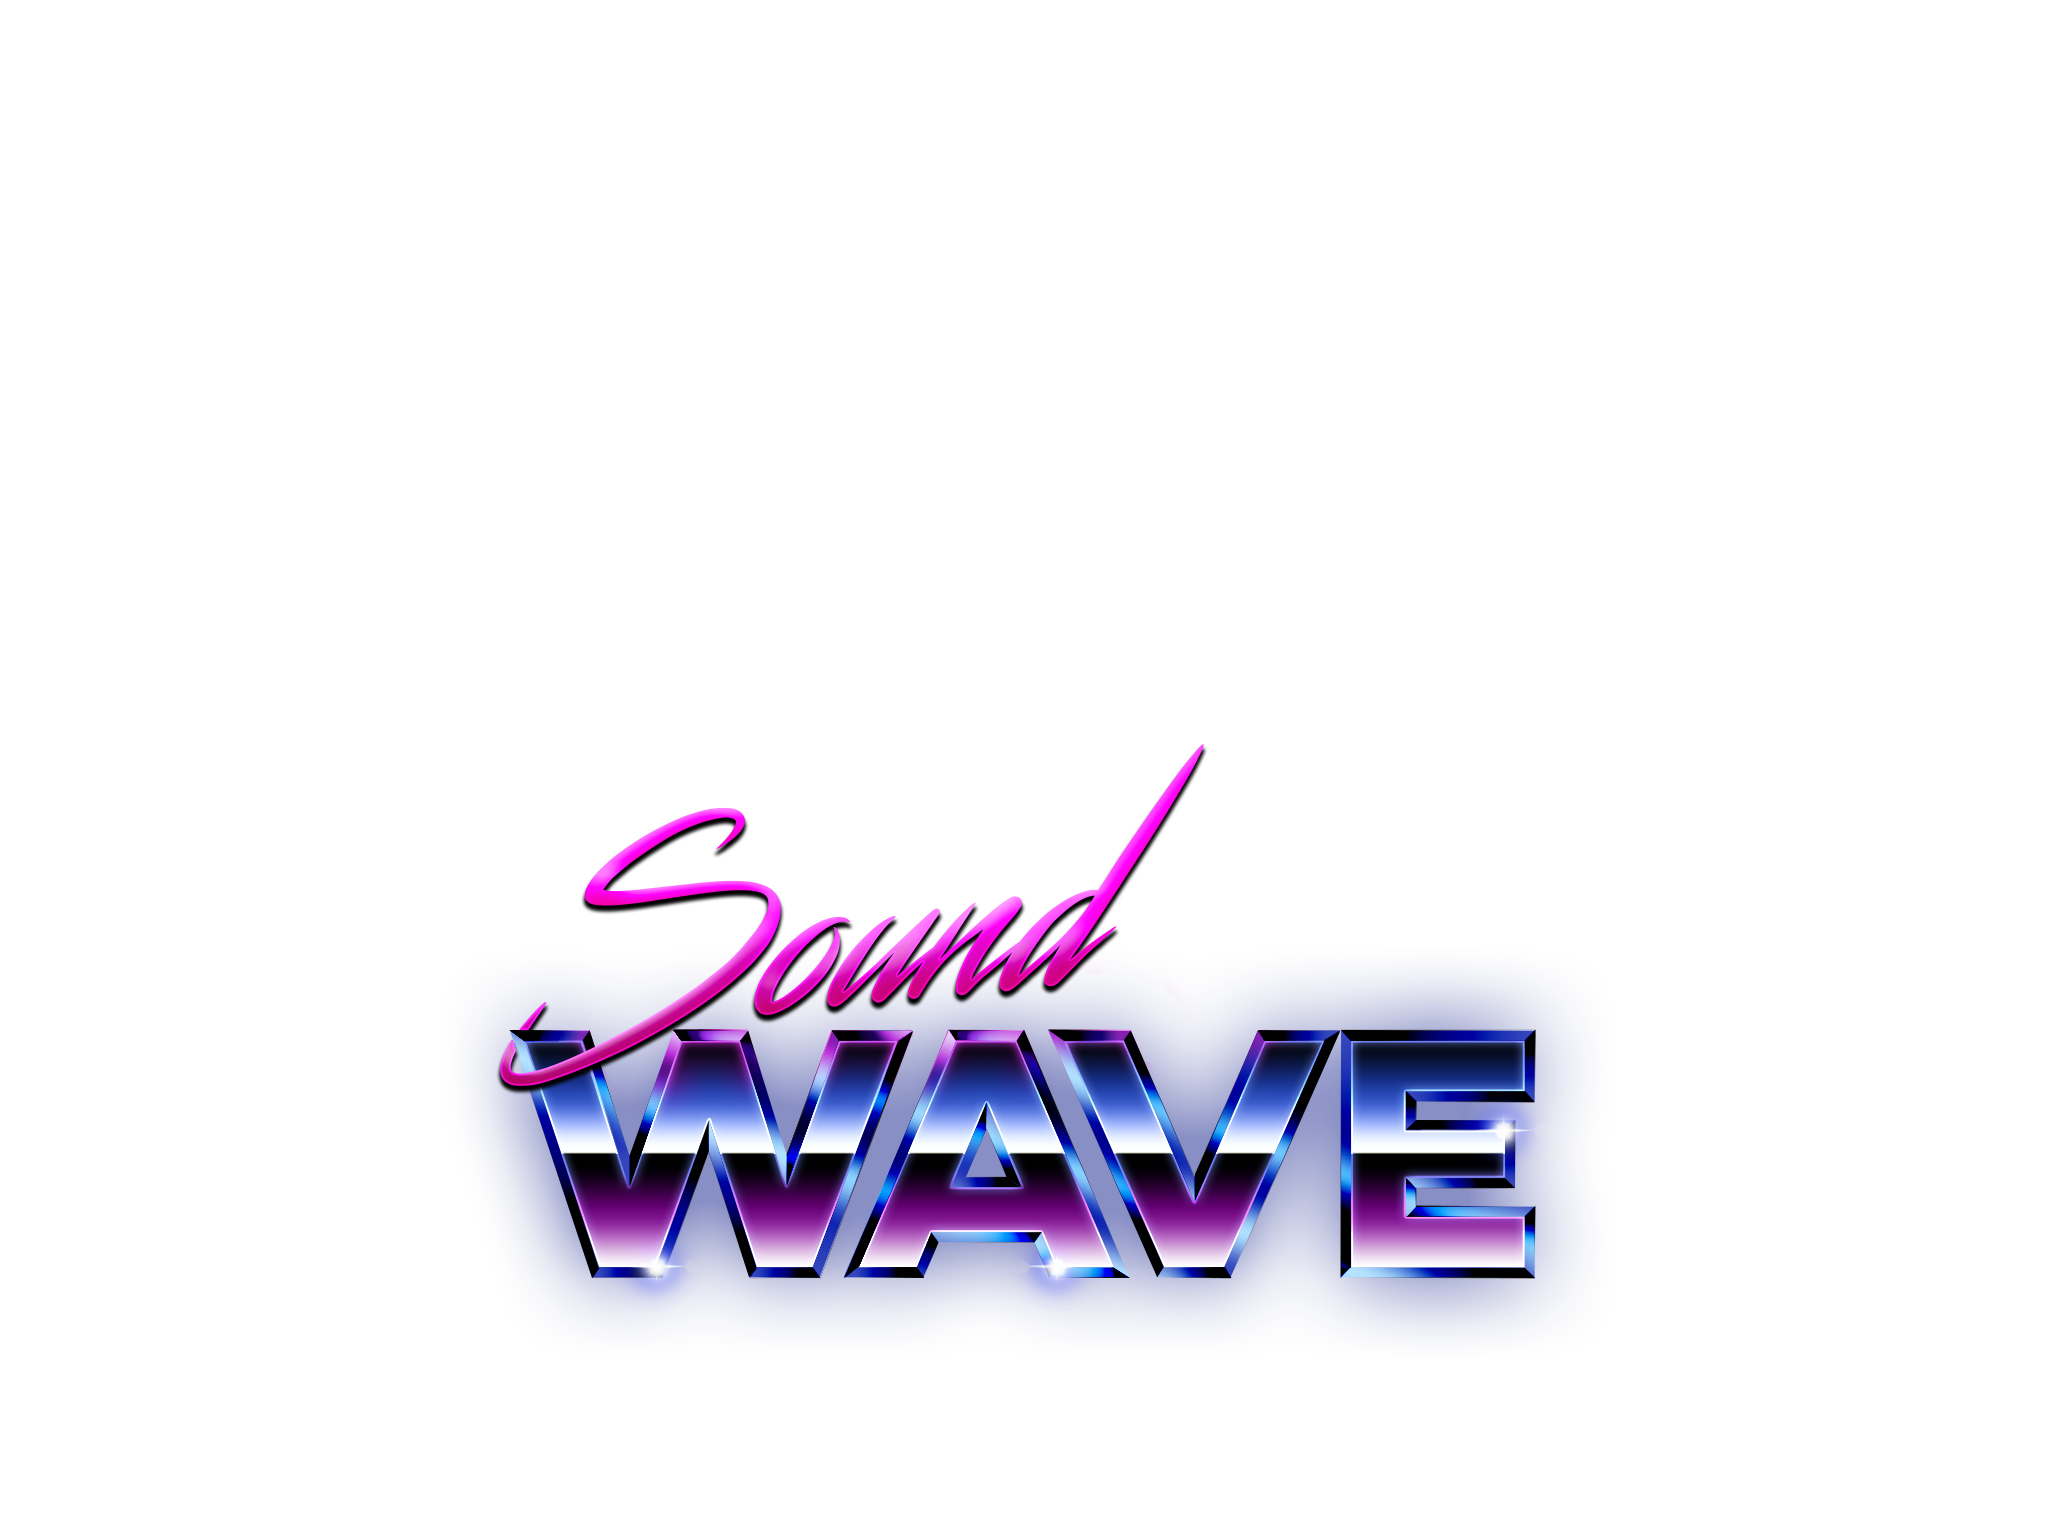 soundwaves tampa fl